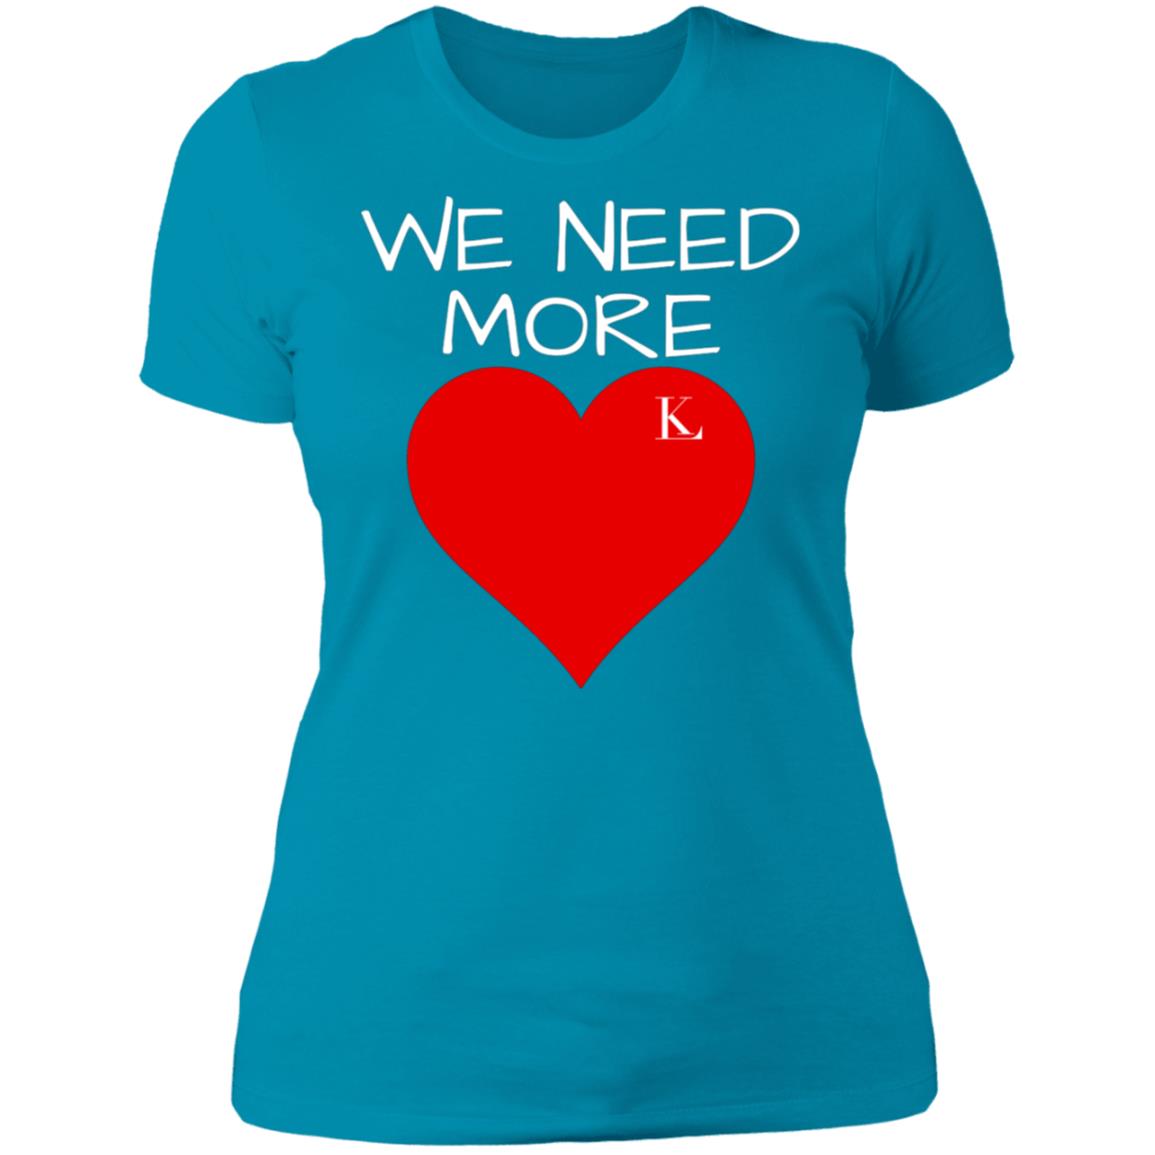 We Need More Love Women's Crew Neck T-Shirt